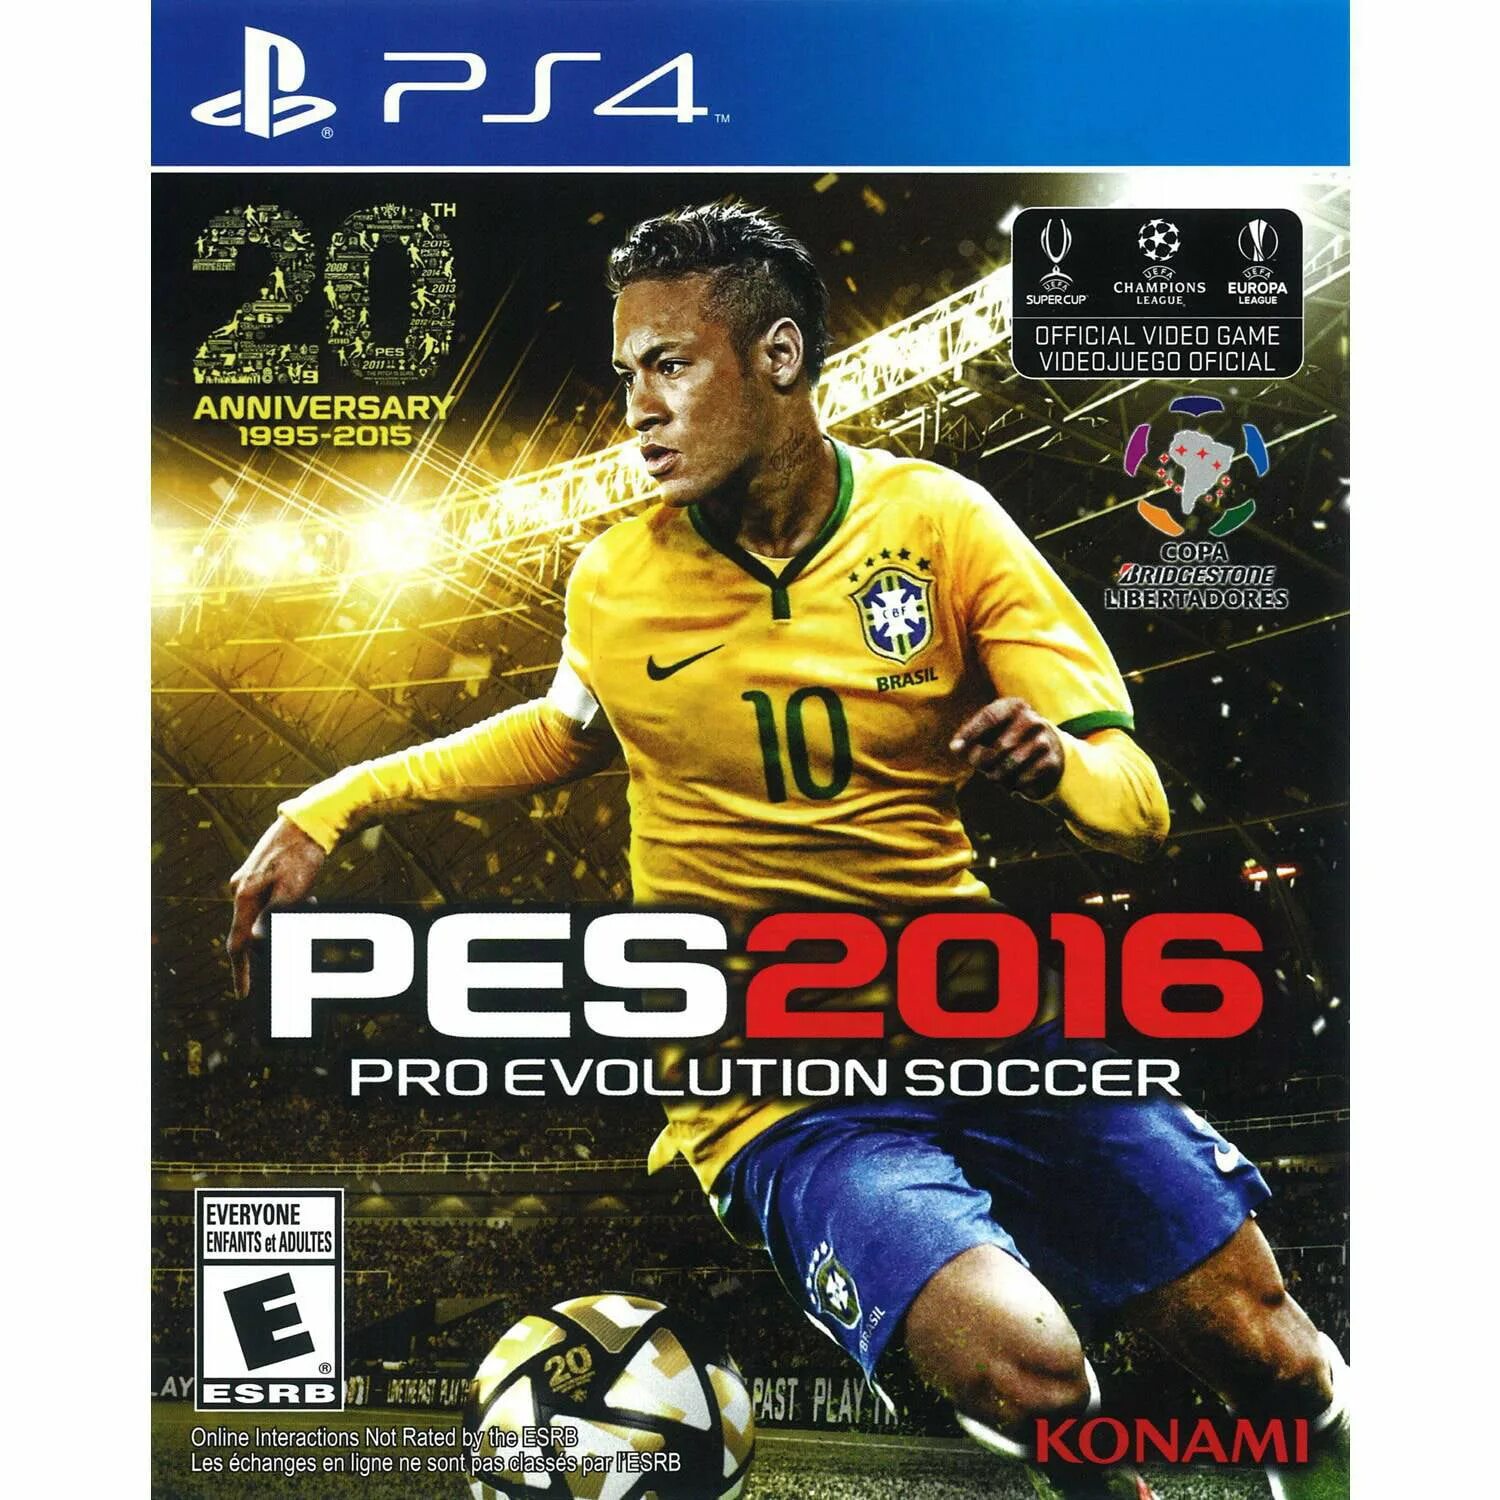 Playstation 2016a. Pro Evolution Soccer 2016. PES 2016 Konami. PLAYSTATION Pro Evolution Soccer. PES ps4.